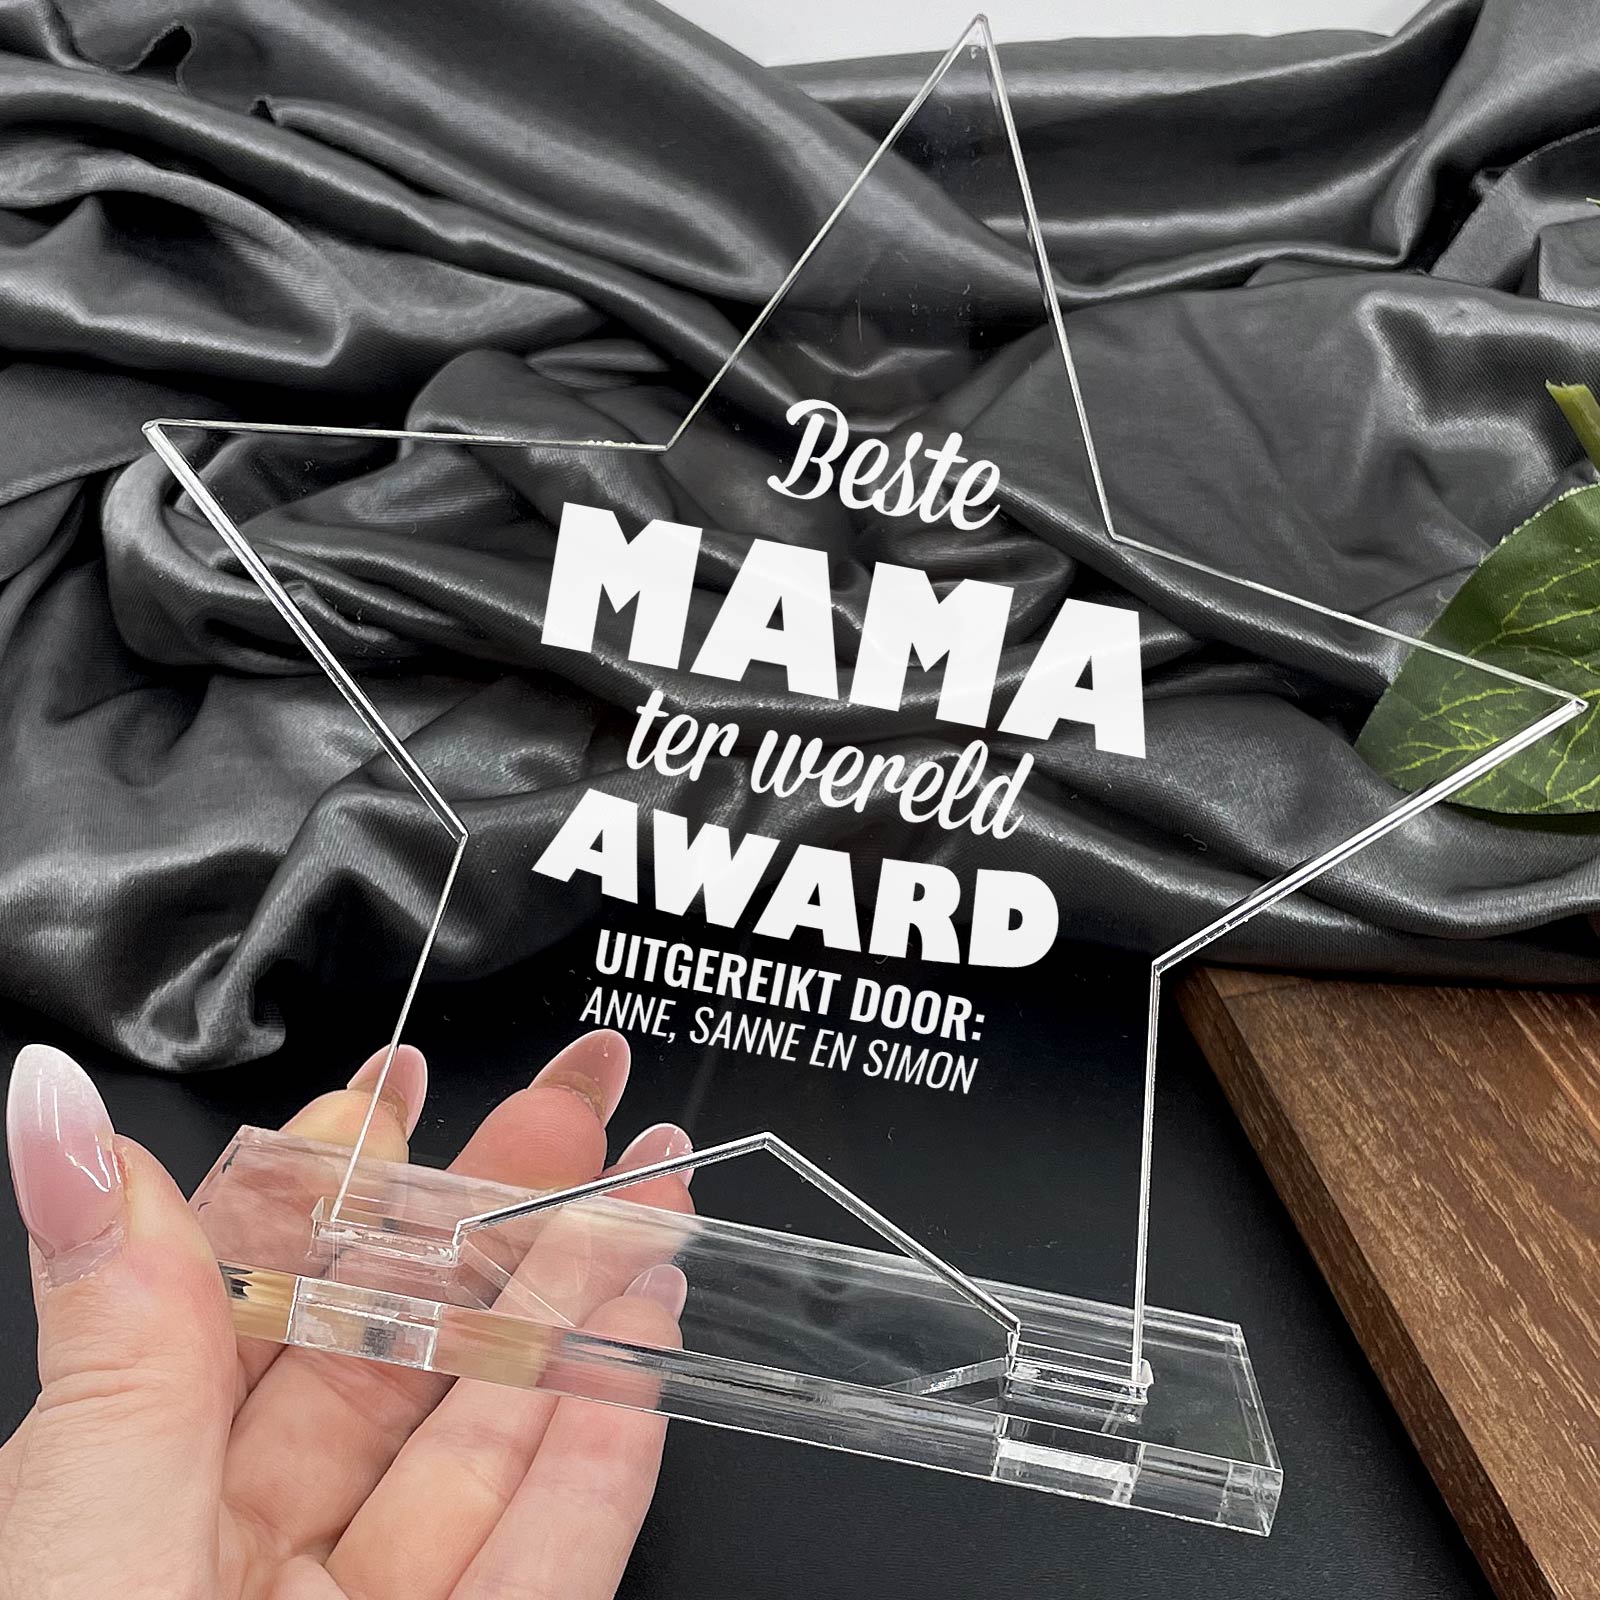 Beste Mama Ter Wereld Award - Bella Mia